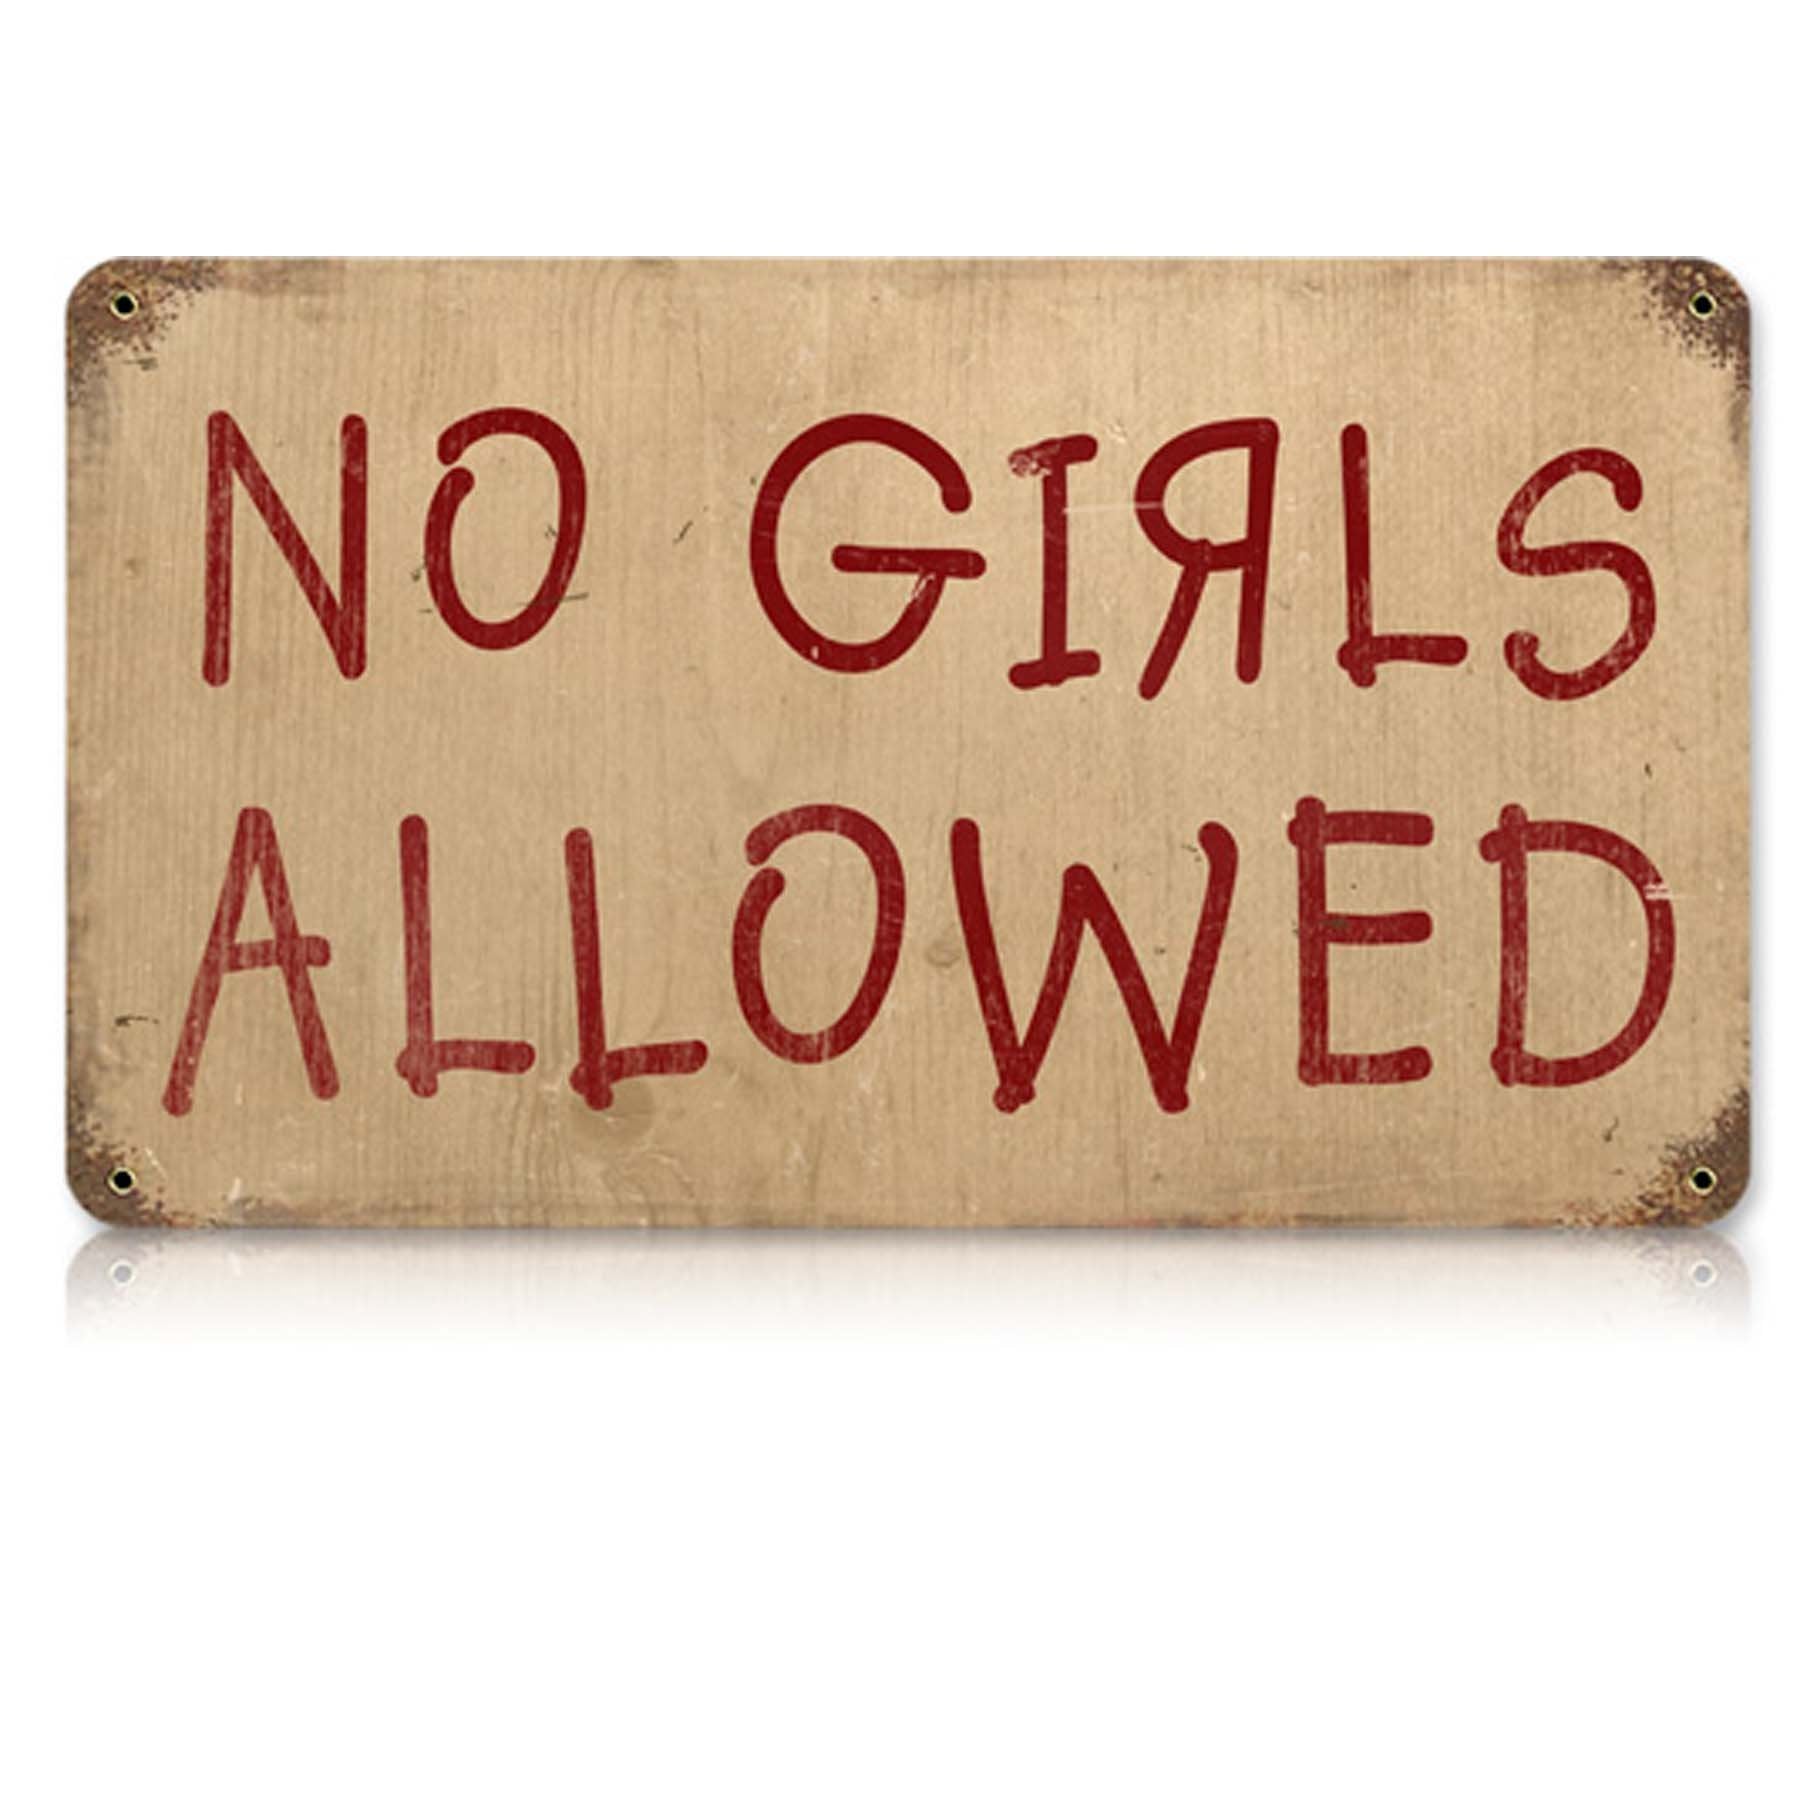 ‘No girls allowed?’ - Emma Willis